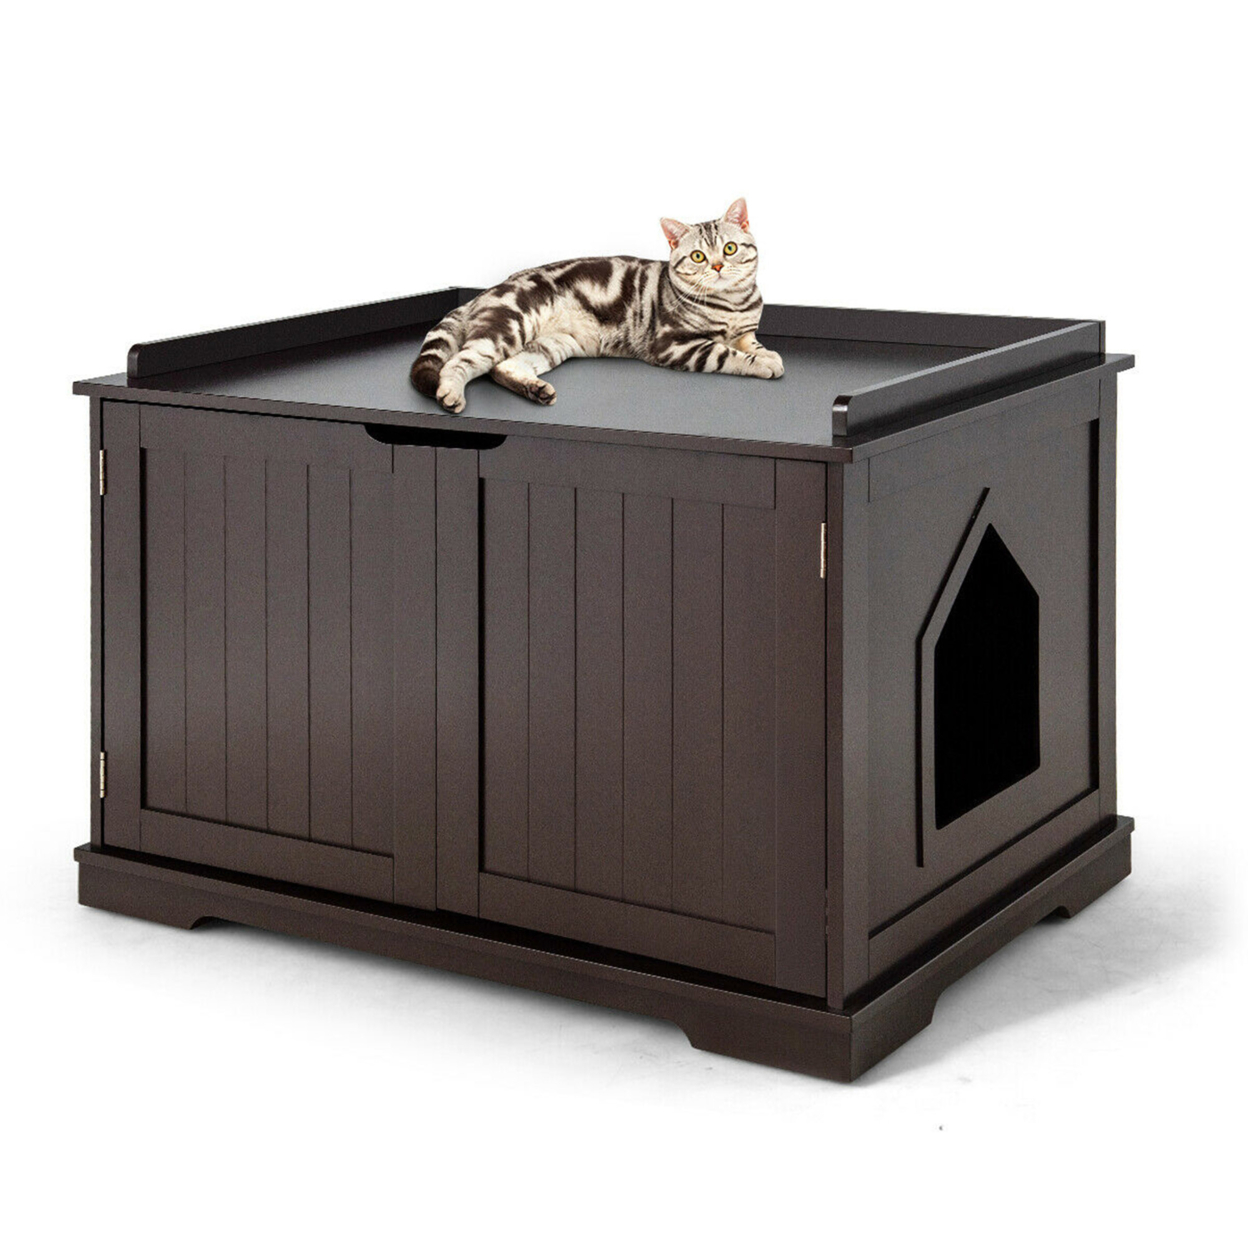 Cat Litter Box Wooden Enclosure Pet House Sidetable Washroom Storage Bench Brown